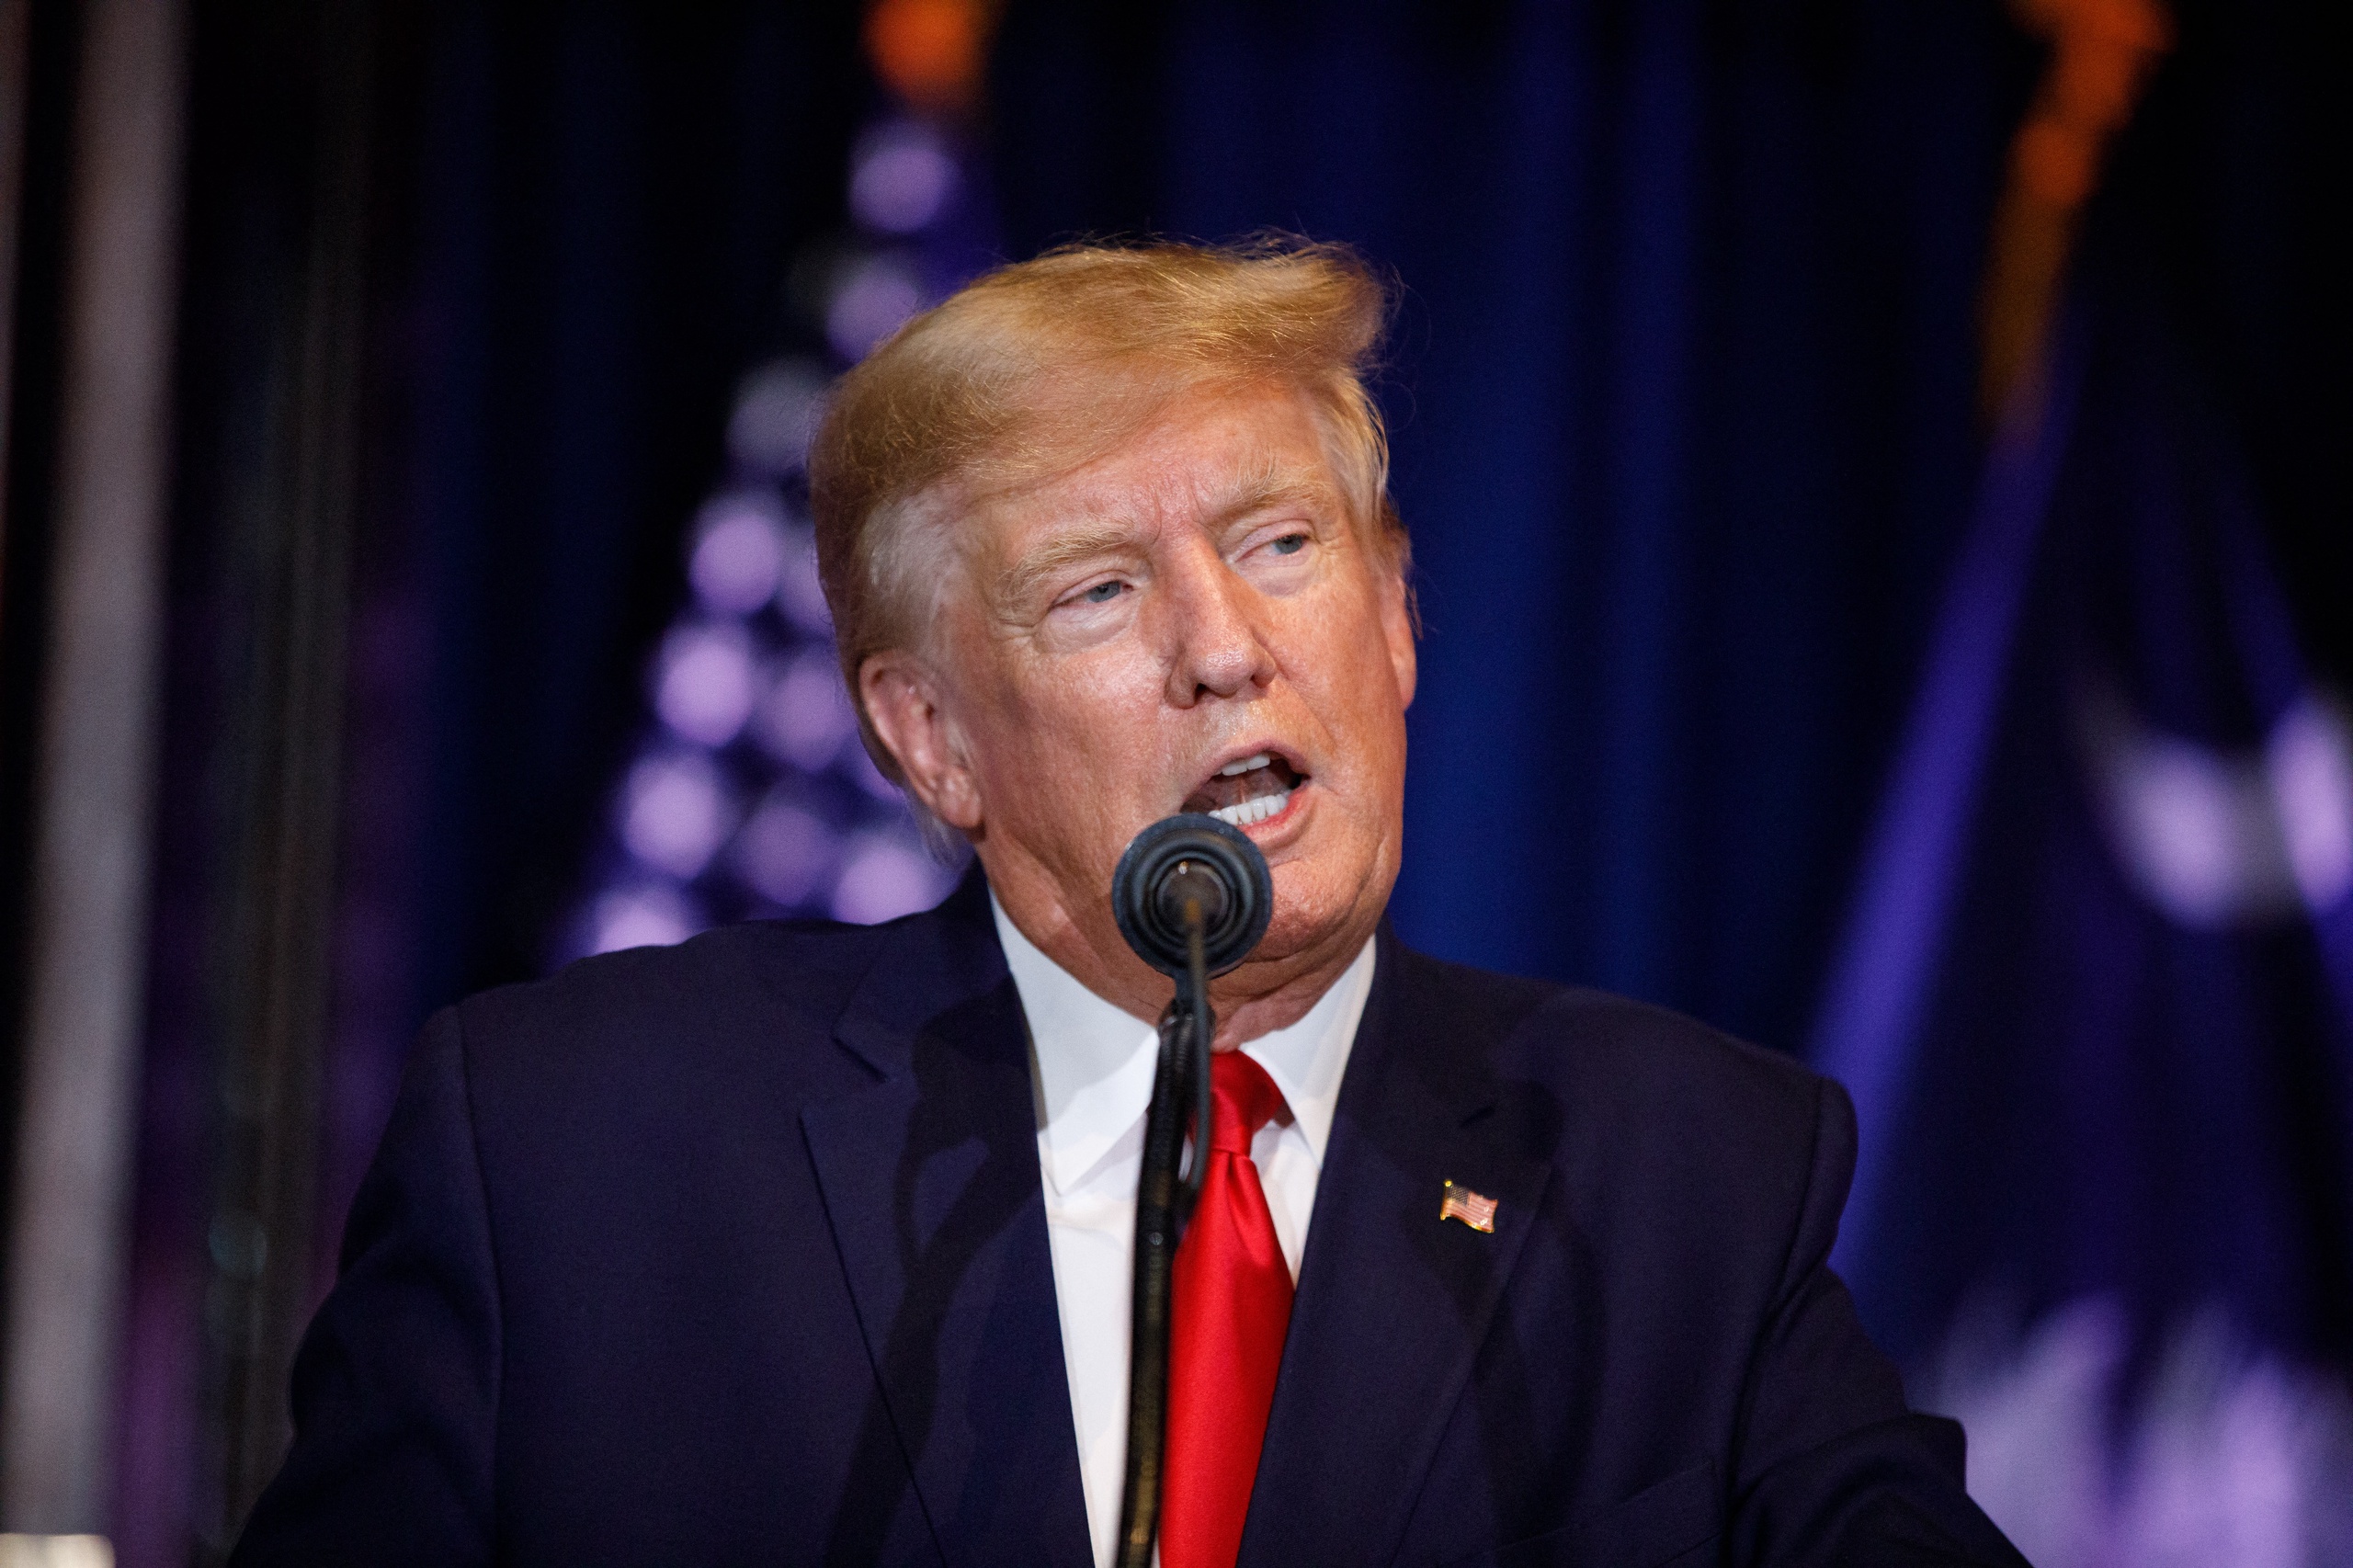  De Amerikaanse televisiezender Fox News noemde Donald Trumps claims over verkiezingsfraude in 2020 intern 'totale onzin'. (Foto: Logan Cyrus / AFP)